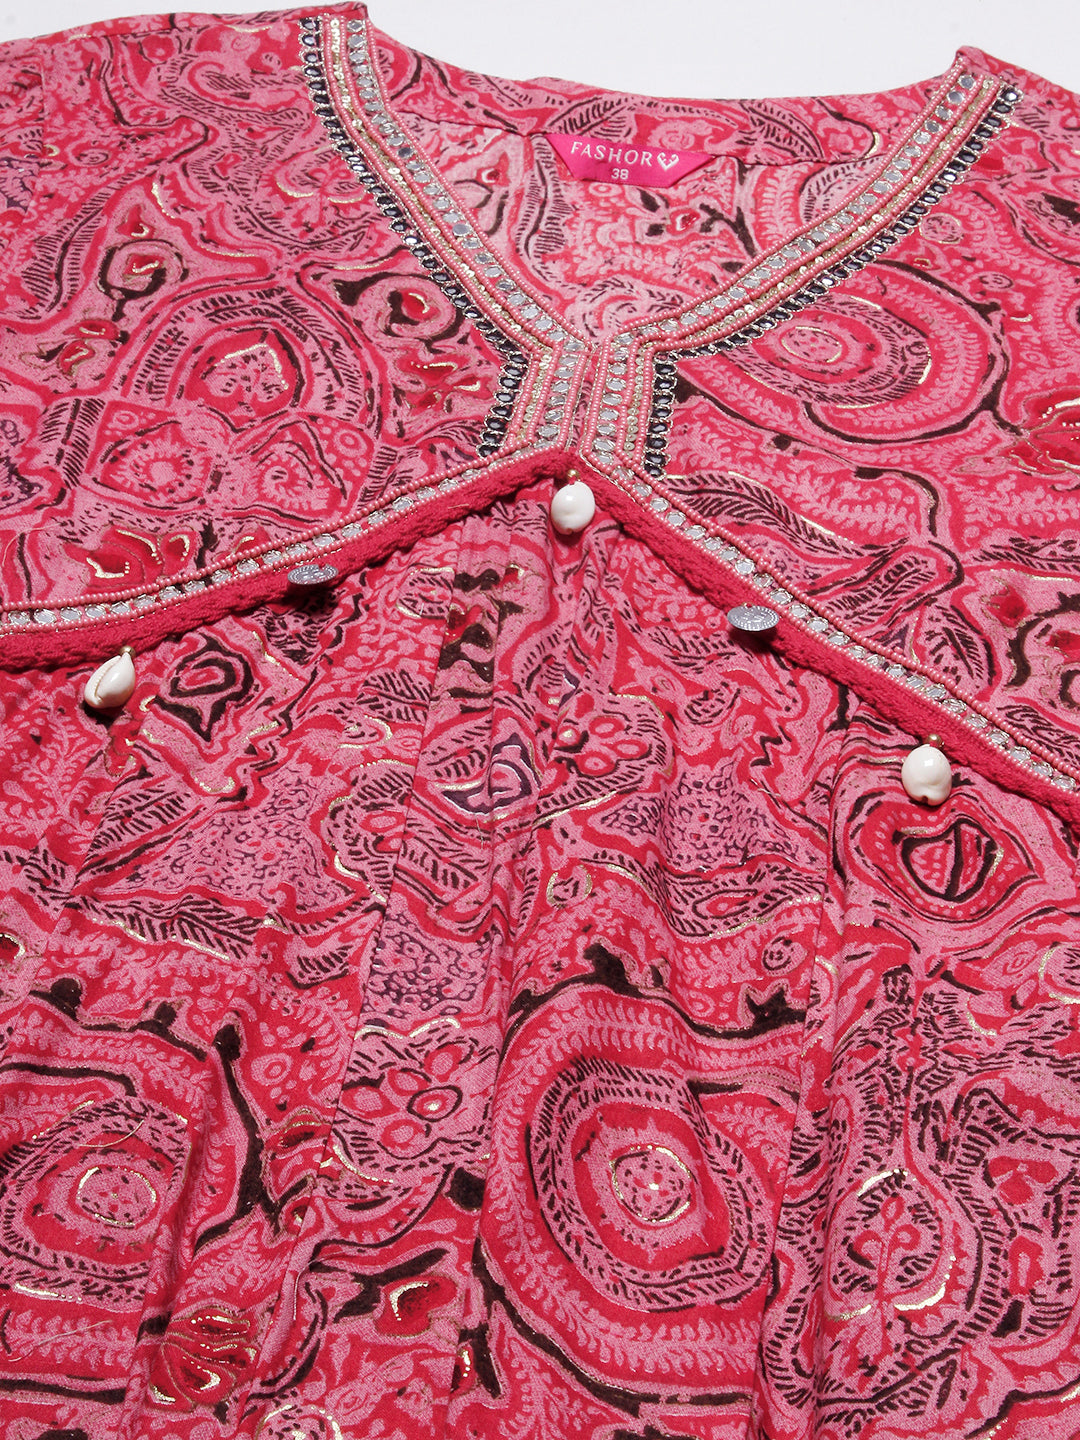 Abstract-Ethnic Printed Mirror, Beads & Zari Embroidered Anarkali Kurta with Pants & Dupatta - Amaranth Pink